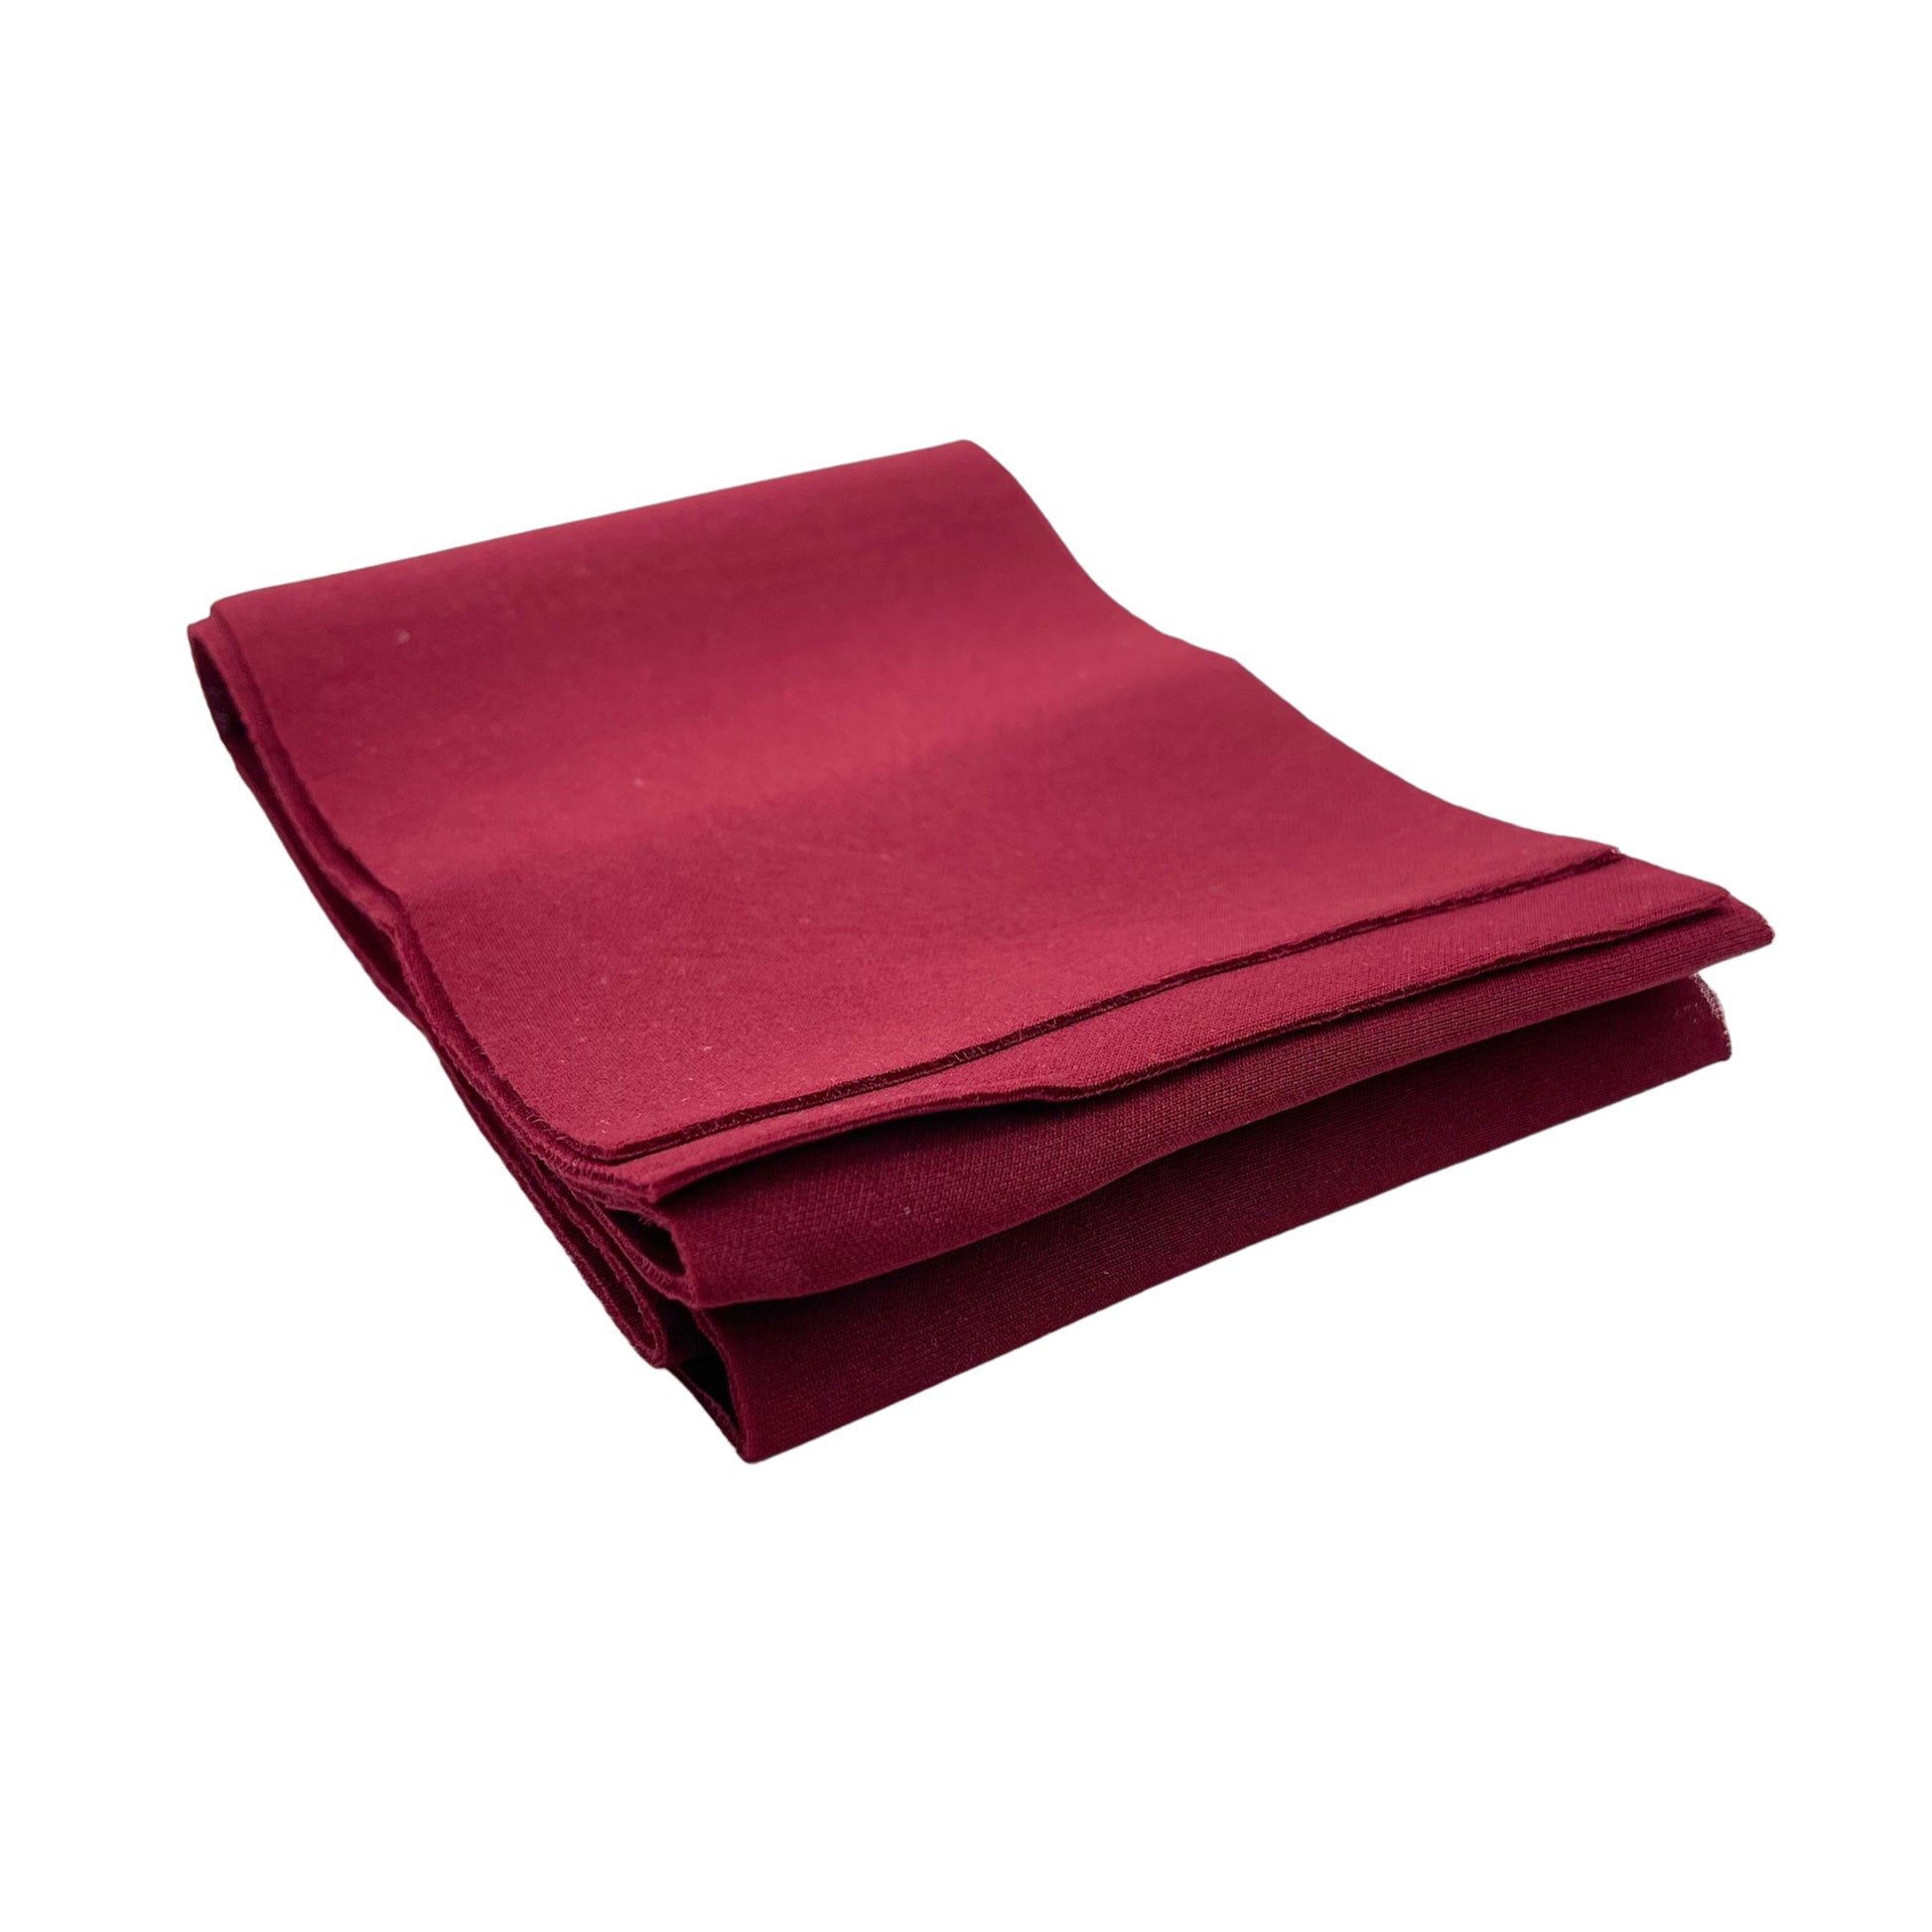 Folded neoprene fabric strip in the color burgundy cabernet.